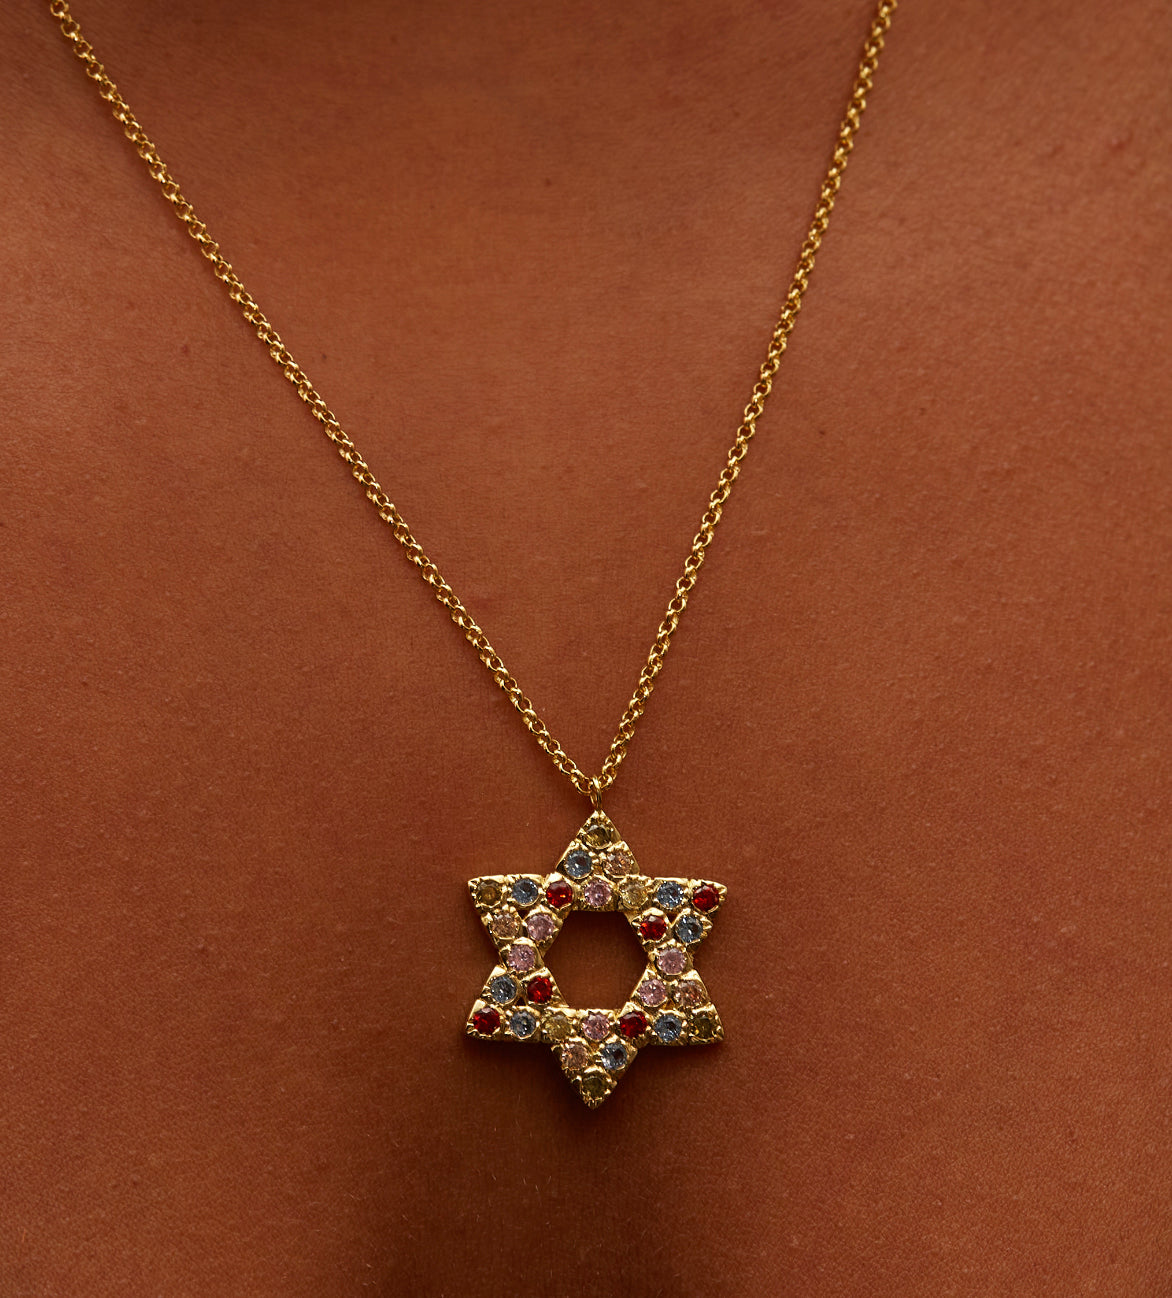 Fashion Magen David Star Pendant Necklace Israel Jewish Stainless Steel  Chain Star of David Cross Charm Choker Jewelry Gift